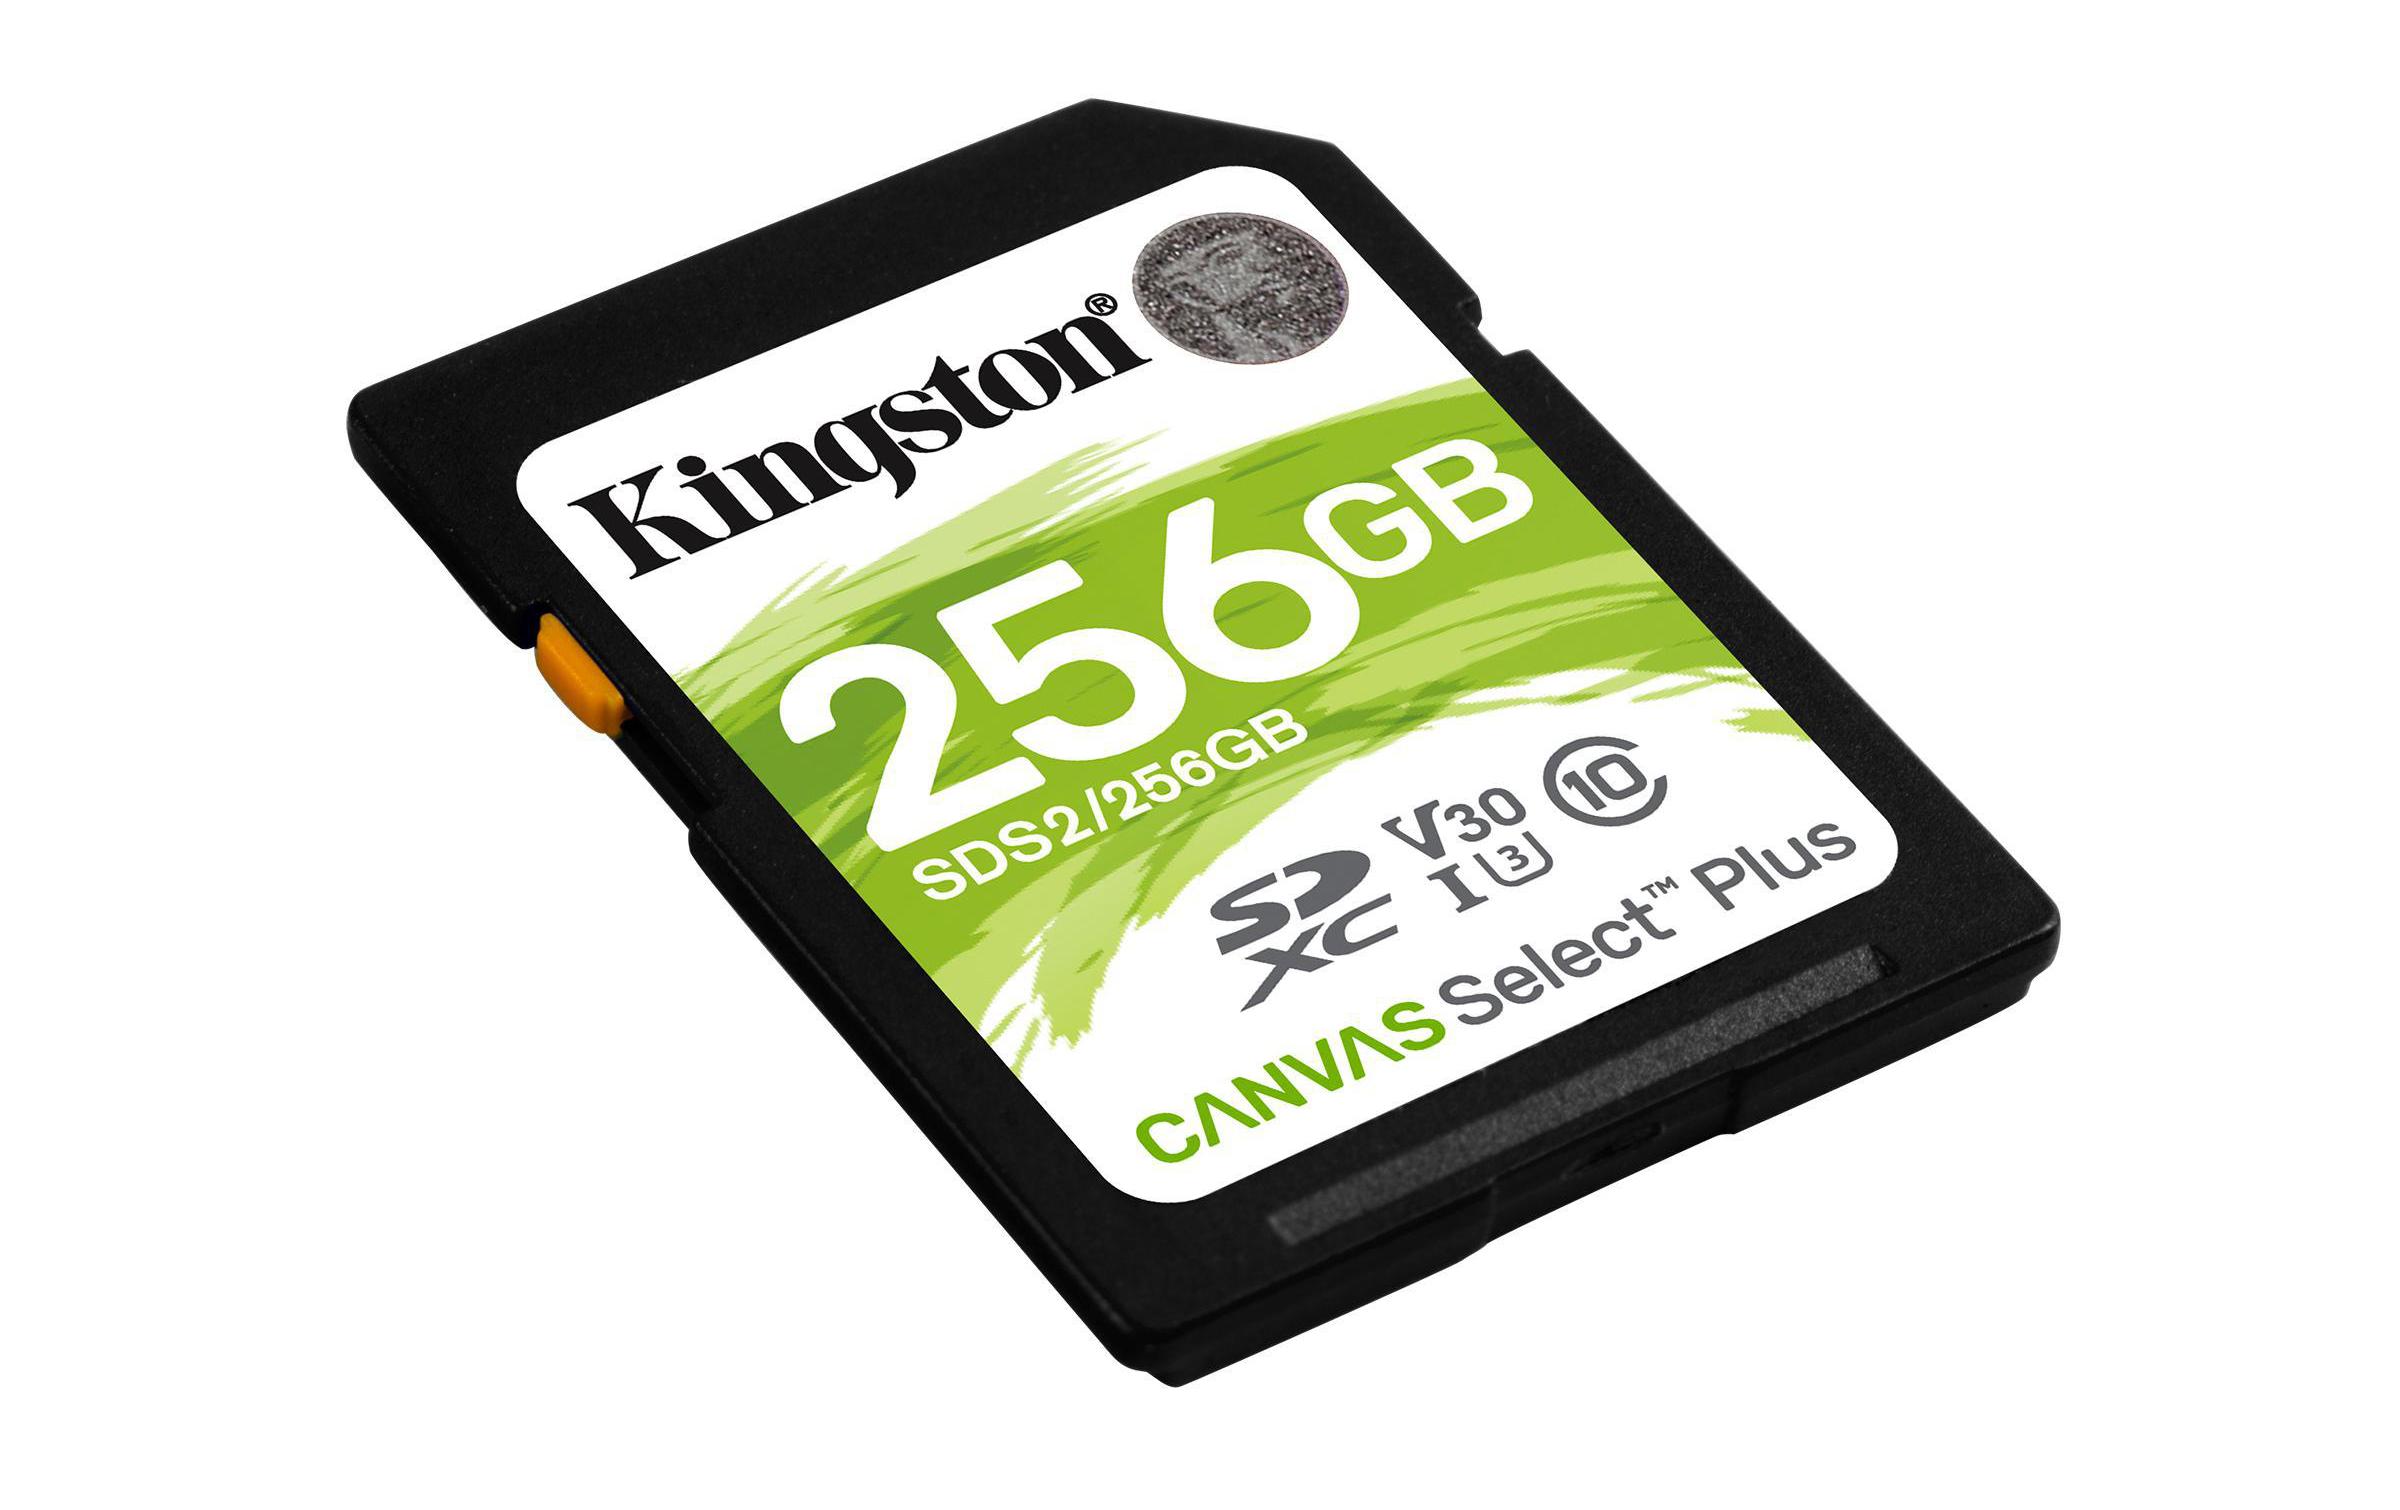 Kingston SDXC-Karte Canvas Select Plus UHS-I 256 GB